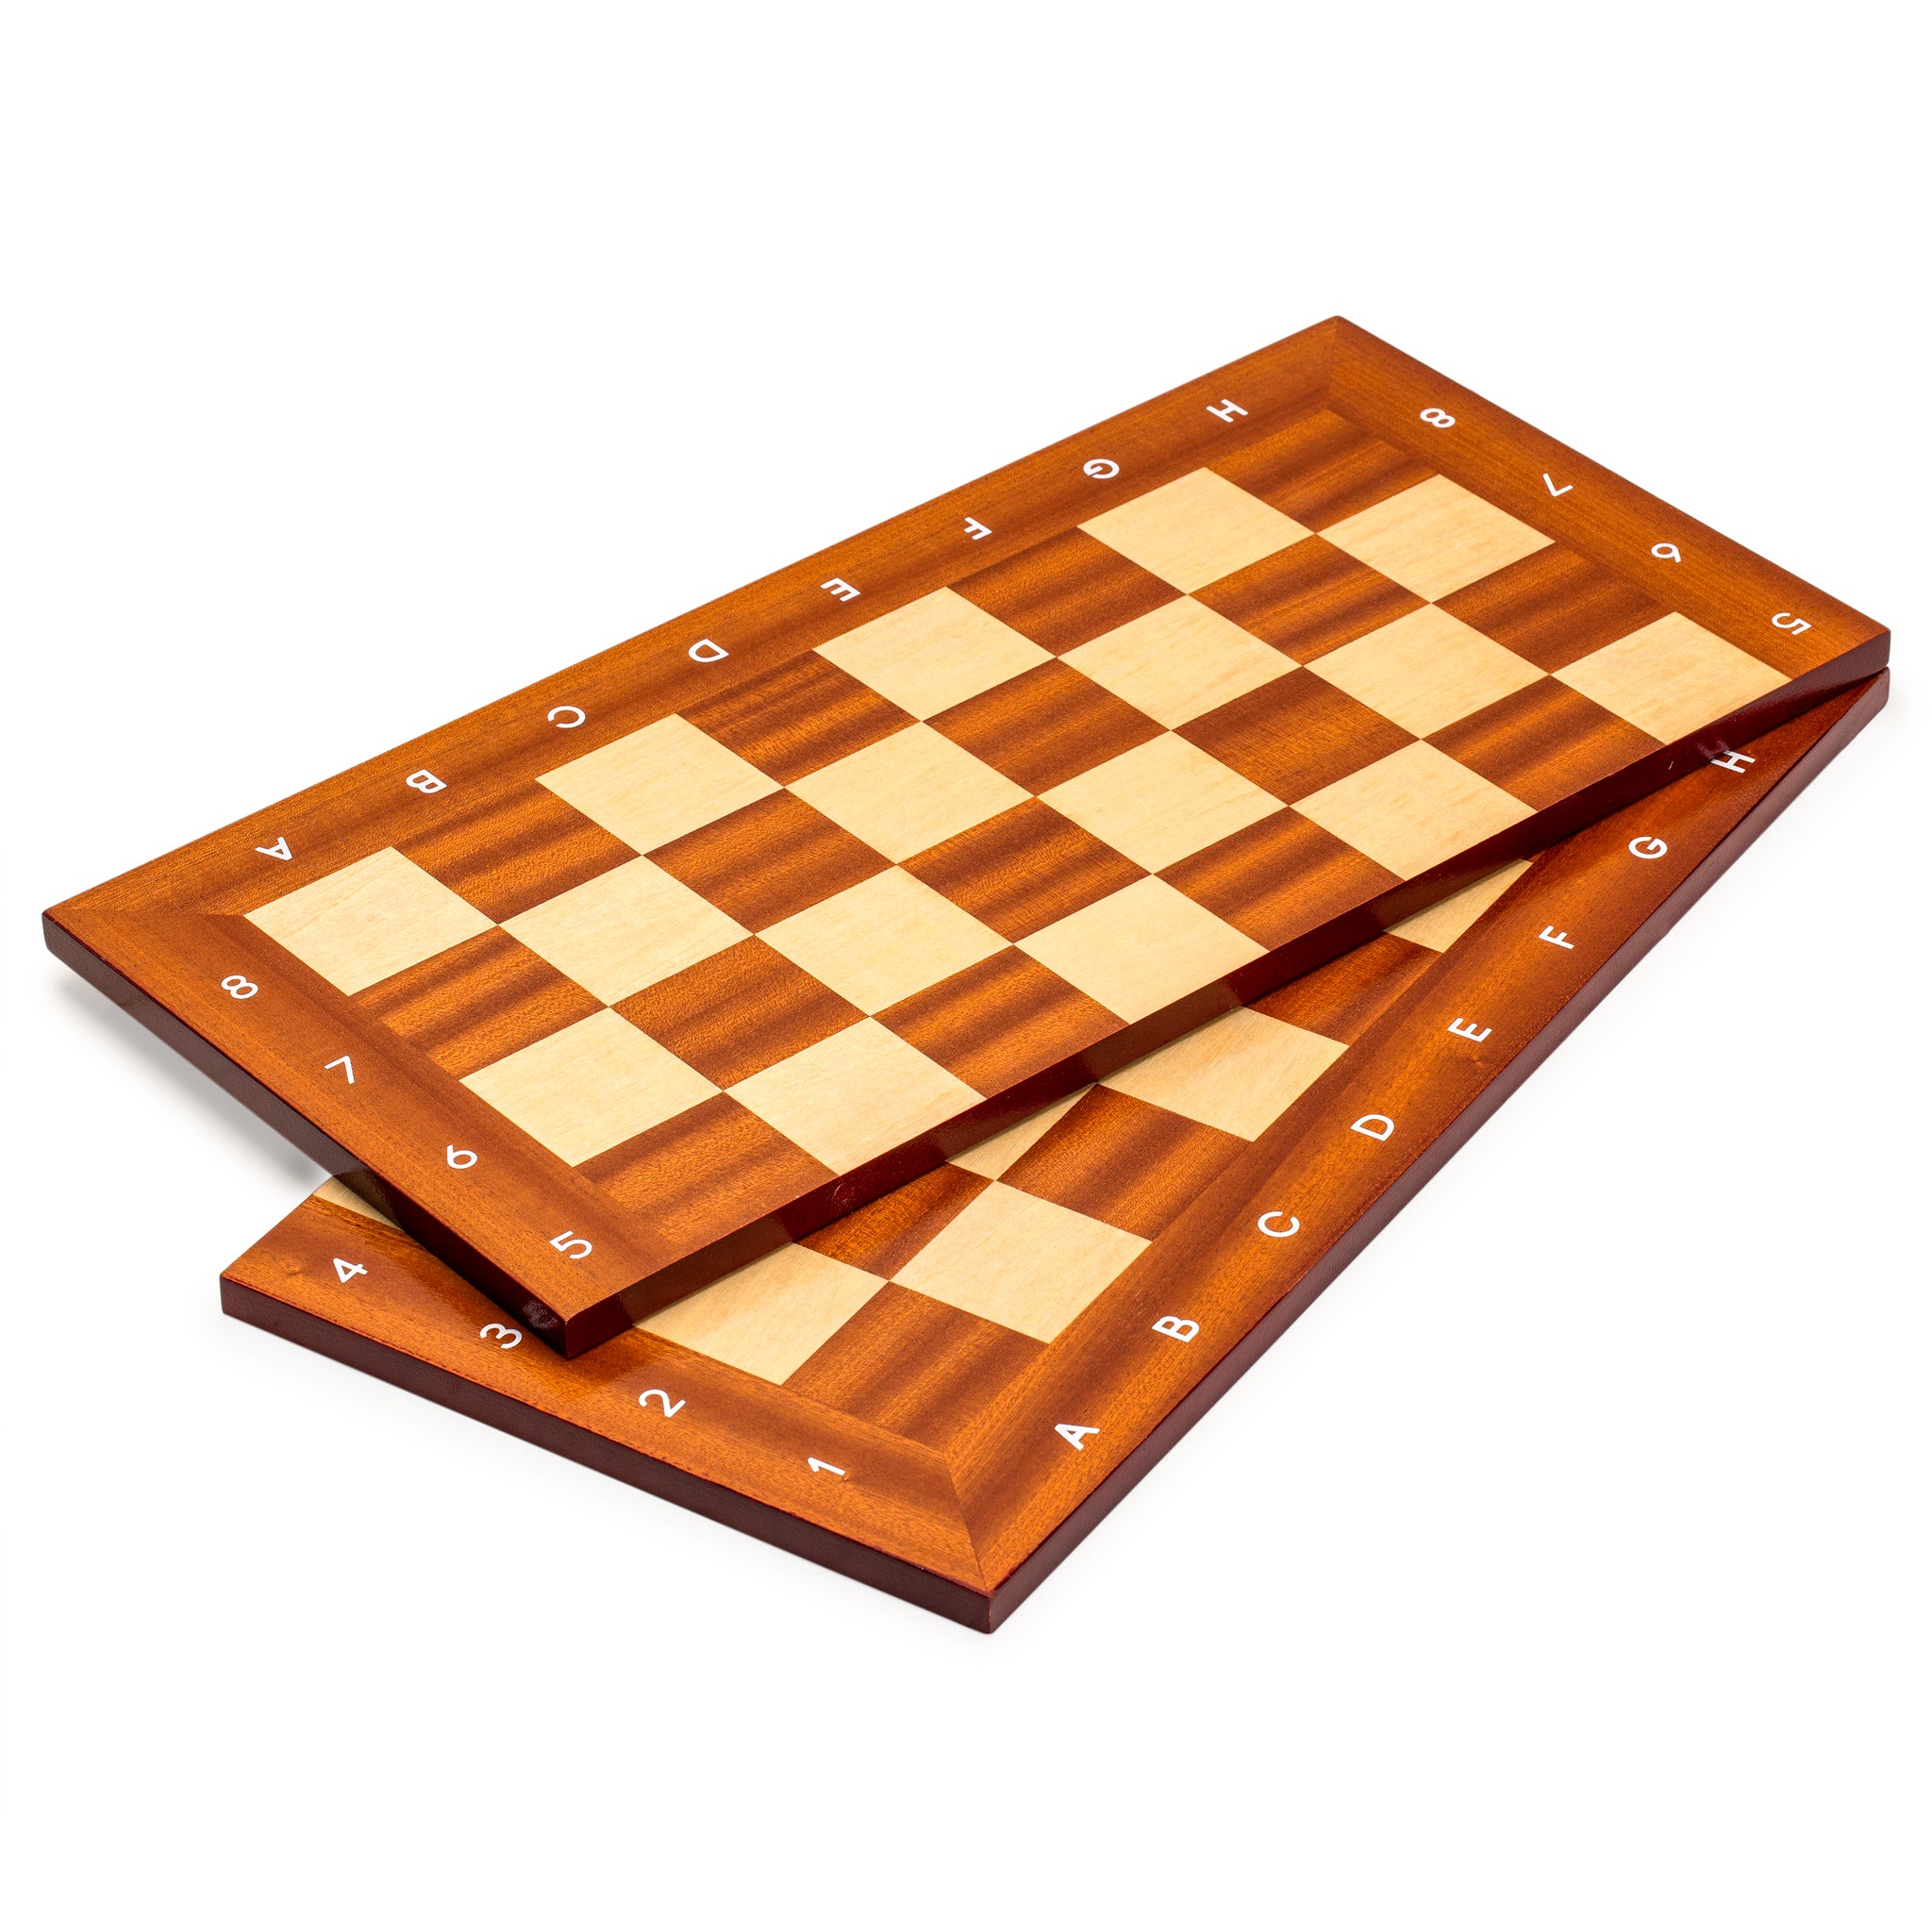 Husaria Magnetically Assembled Professional Staunton Tournament Chess Board, No. 5, 18.9"-Husaria